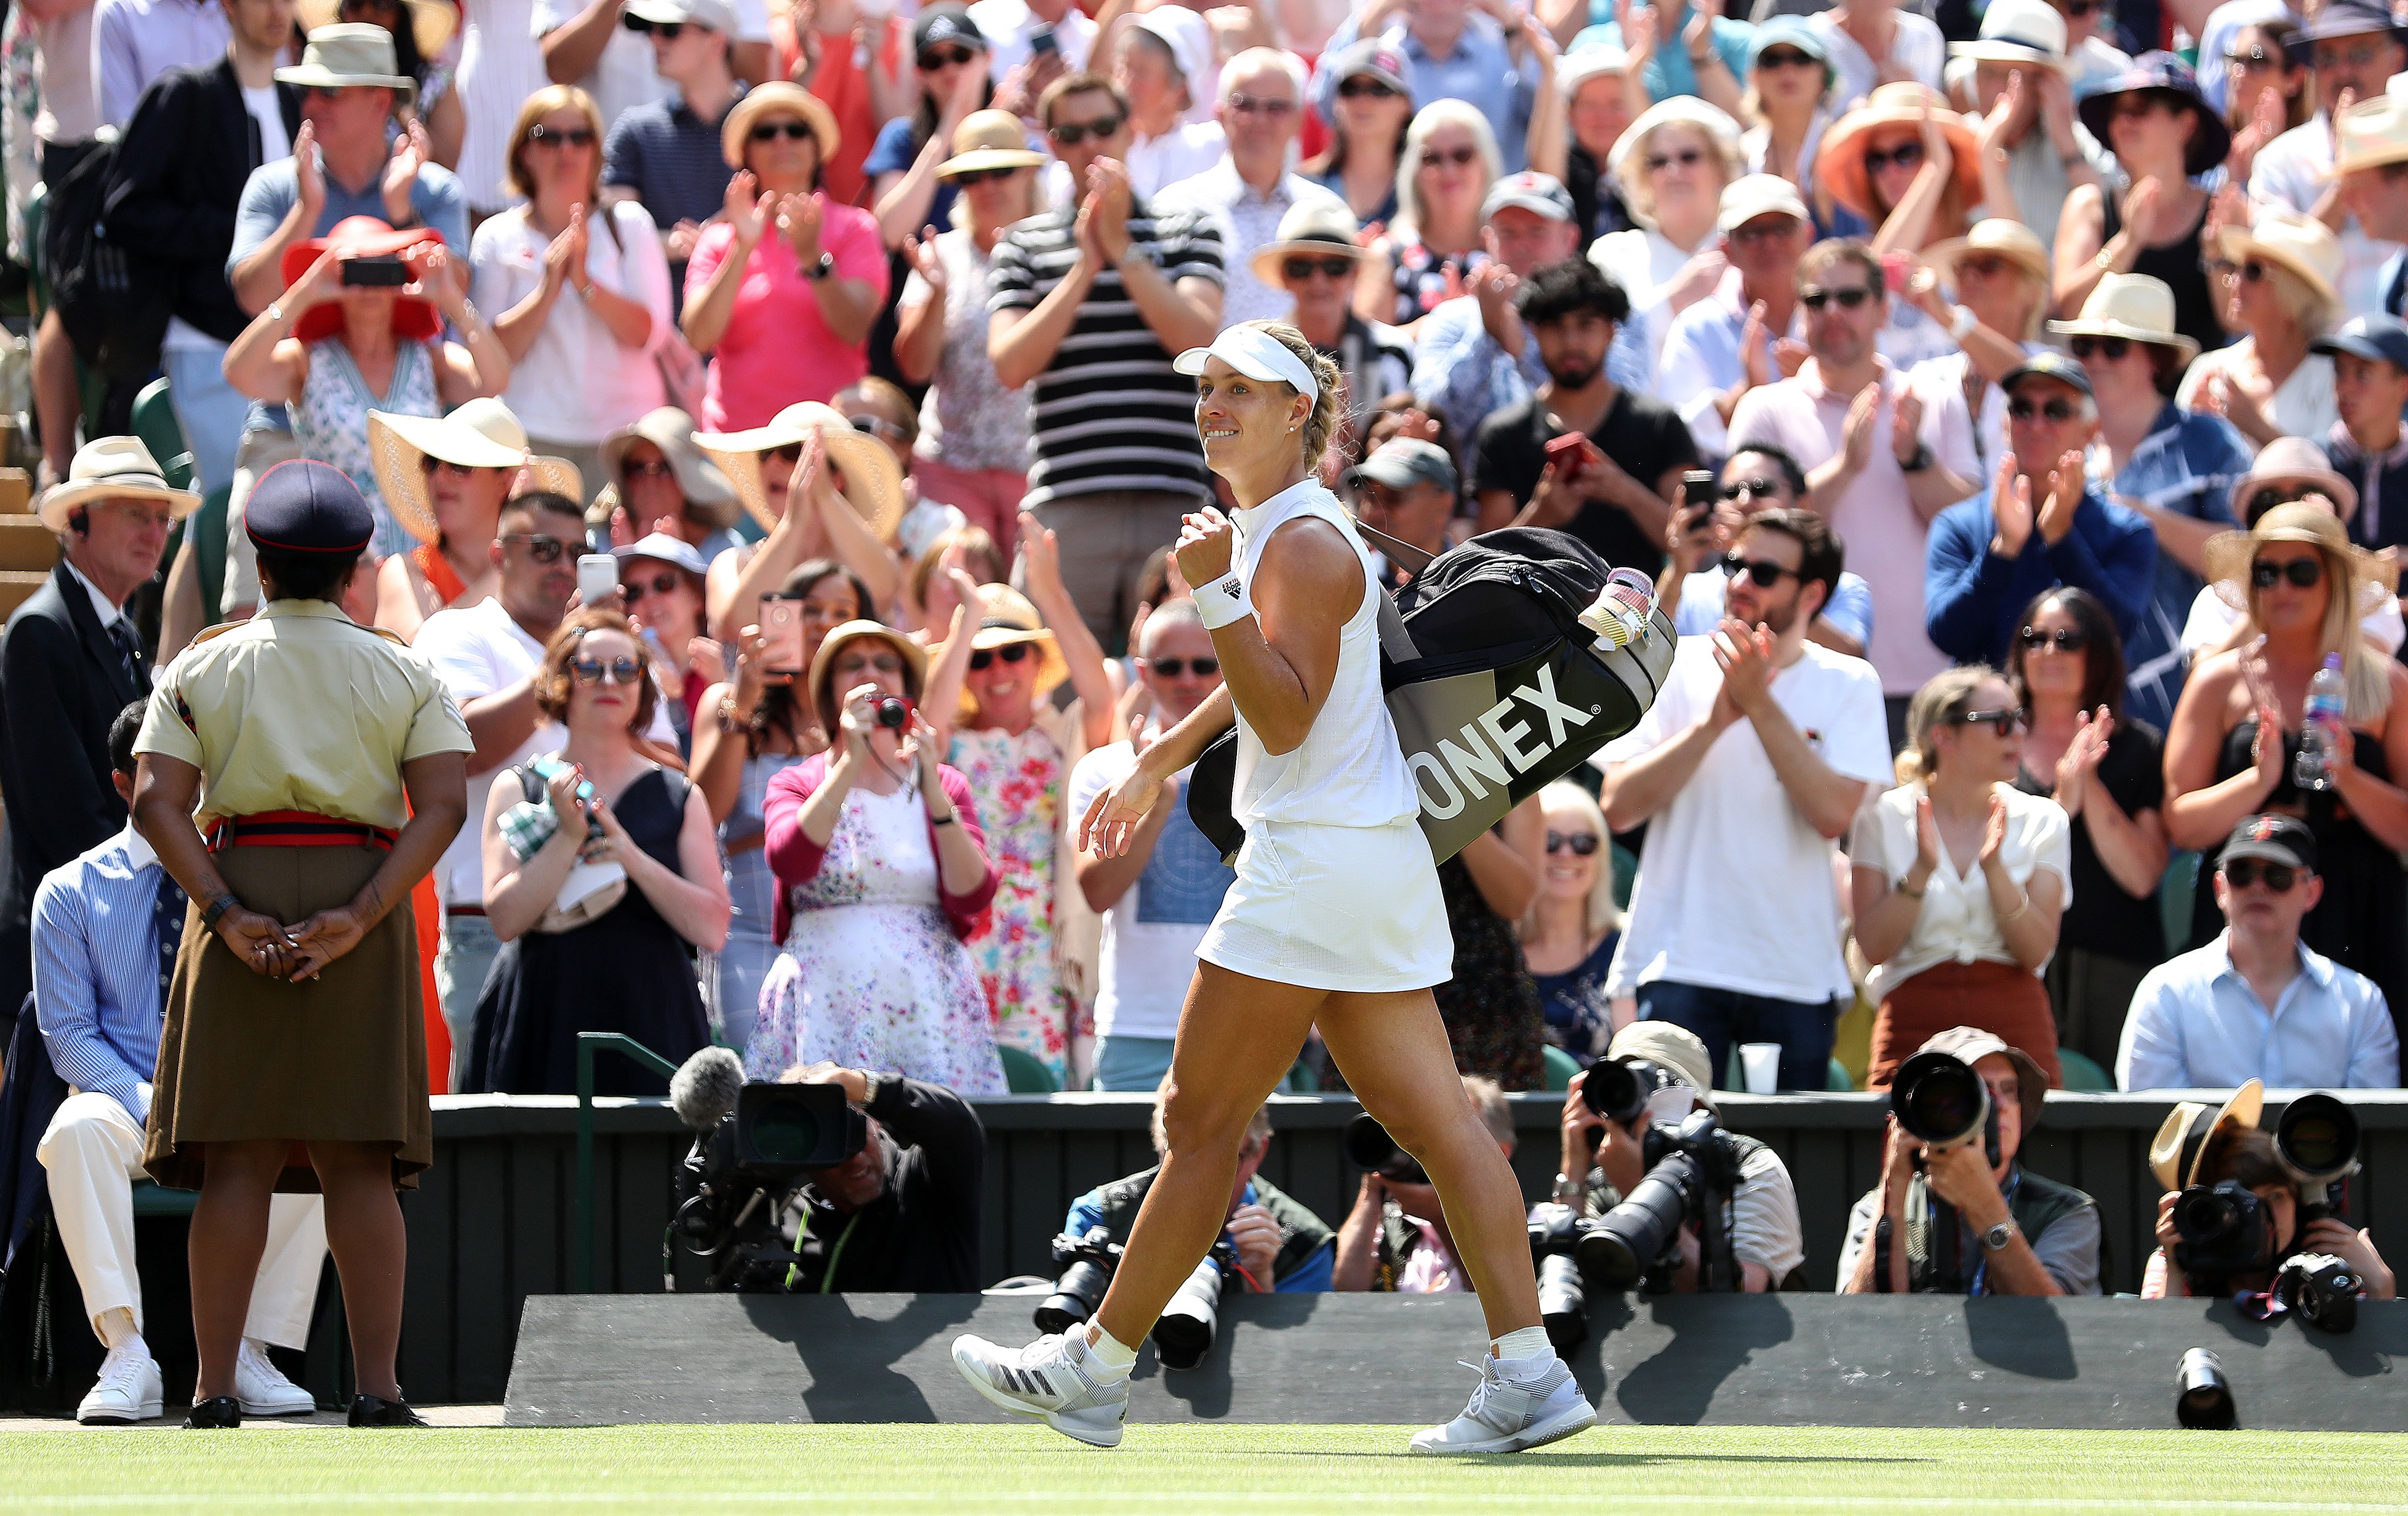 Wimbledon-Finale mit Kerber ZDF überträgt live